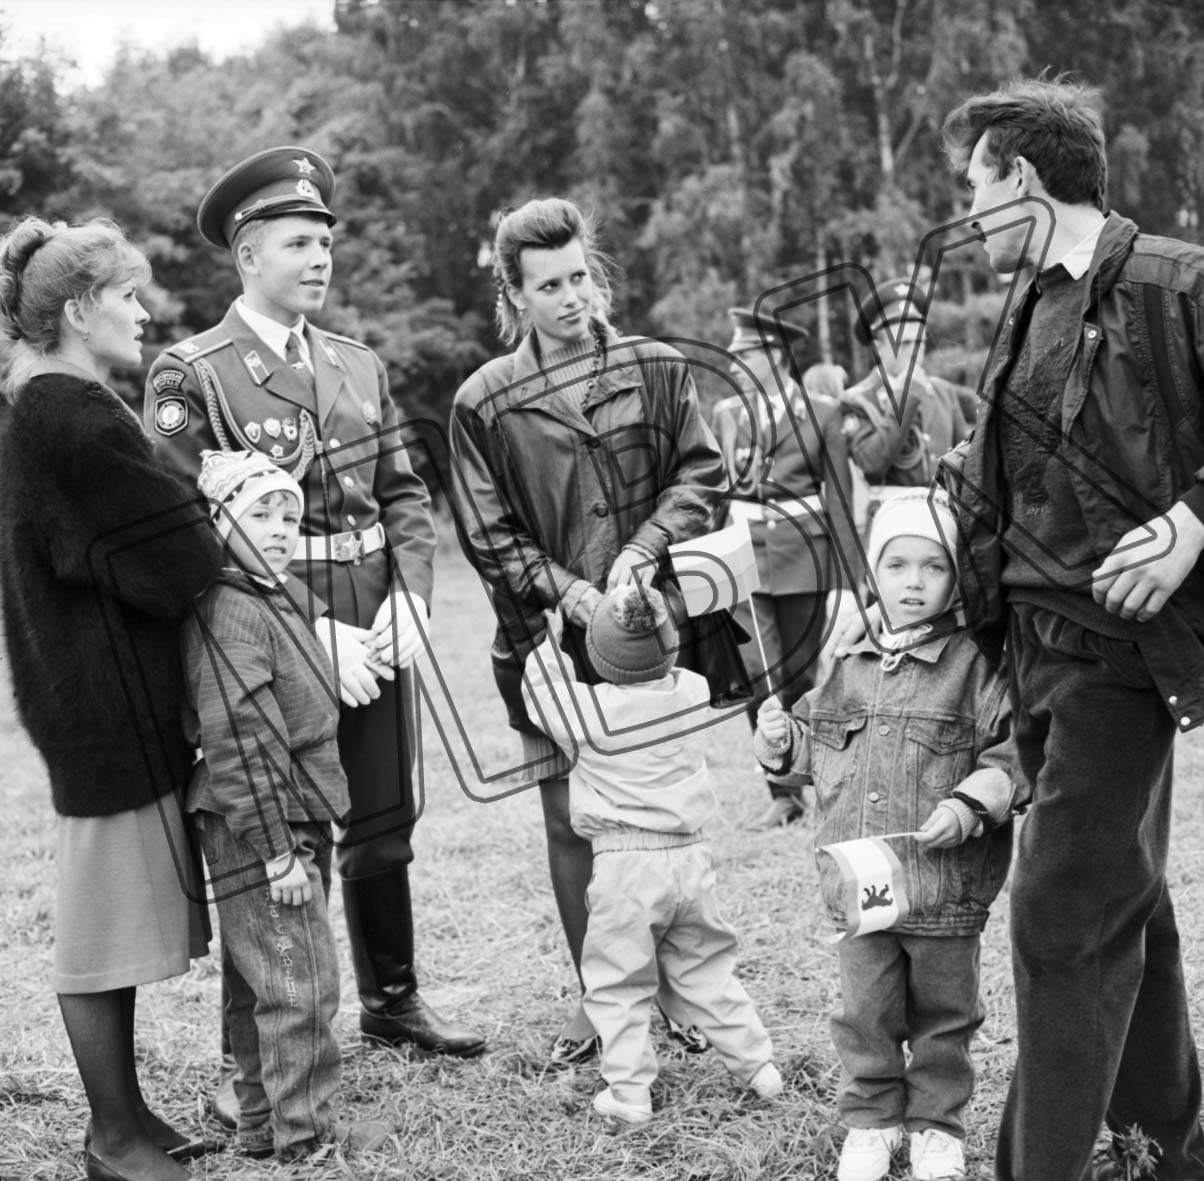 Fotografie: Soldat der Berlin-Brigade trifft Familie im Park, Moskau, 3. September 1994 (Museum Berlin-Karlshorst RR-P)